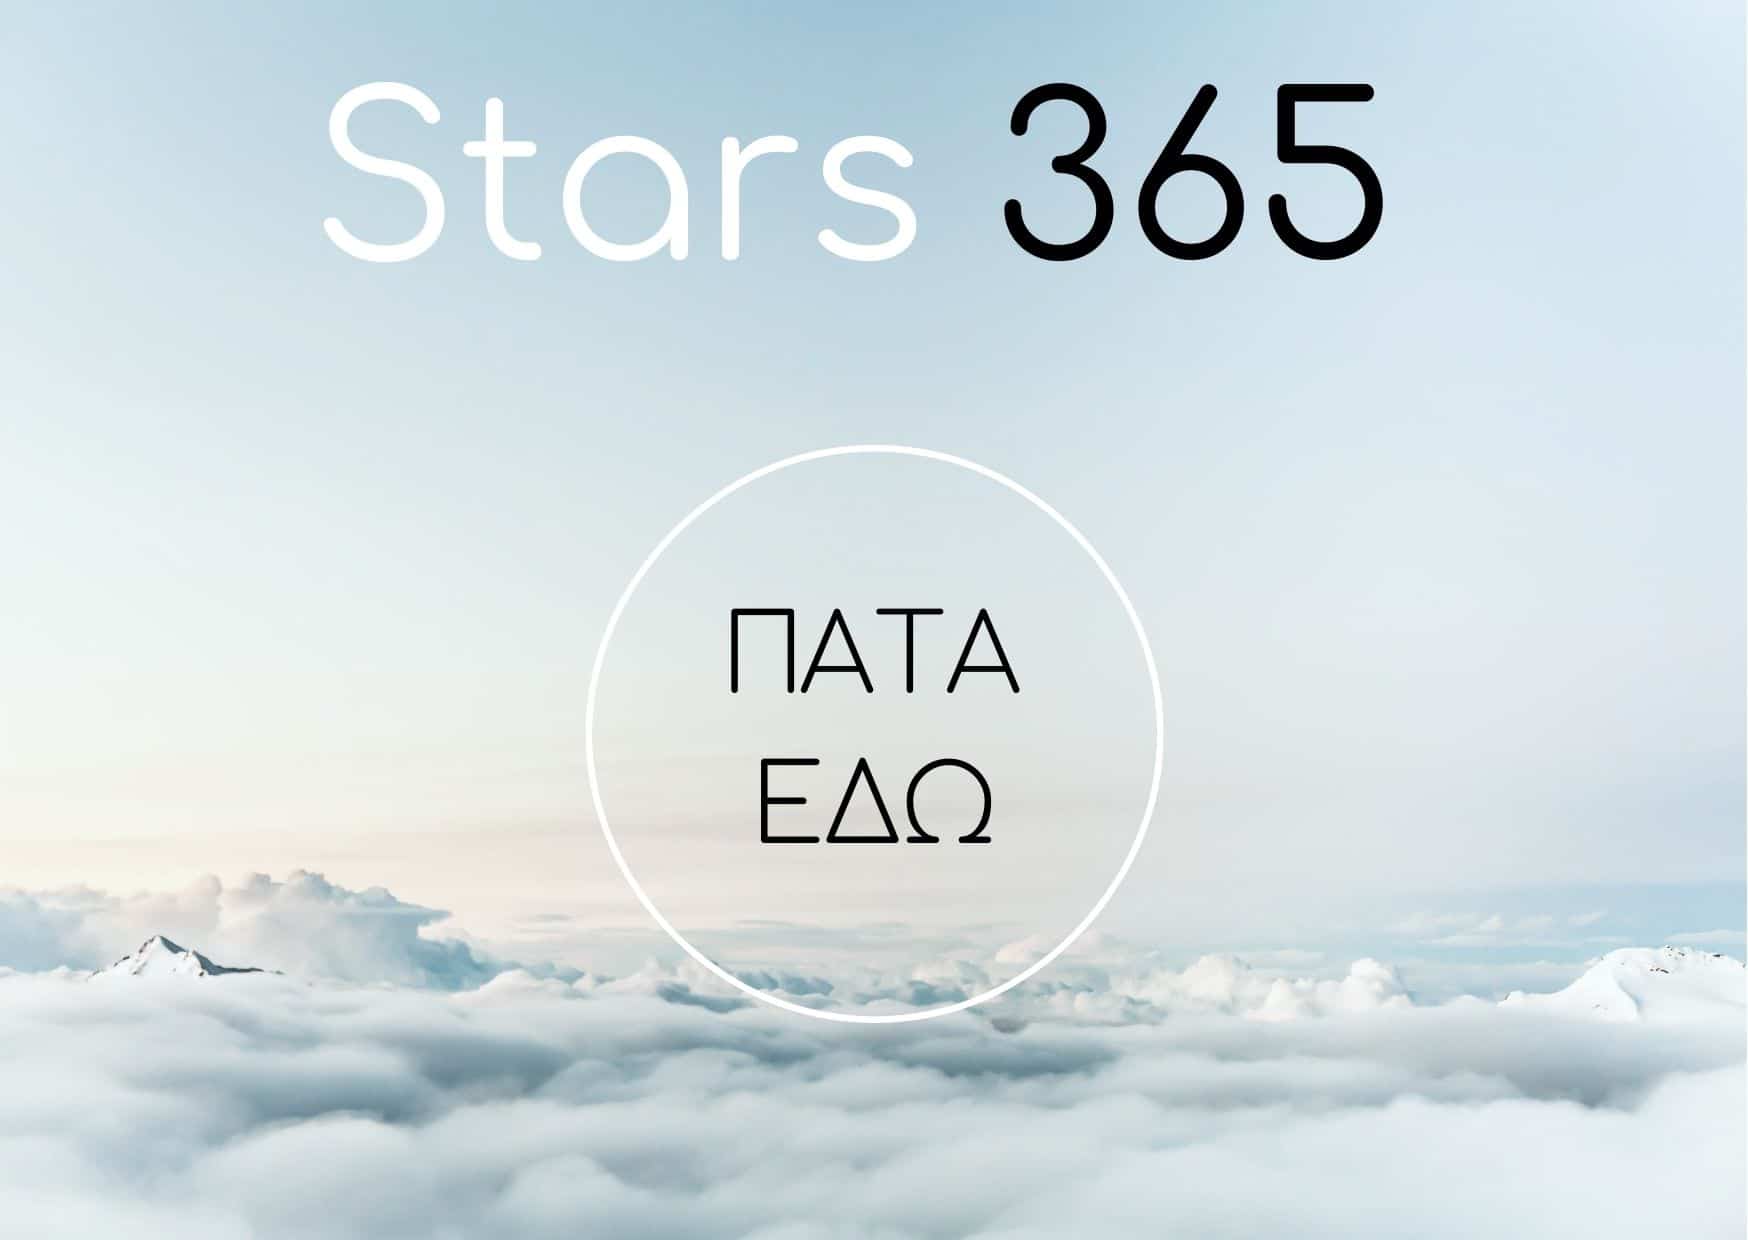 Stars 365